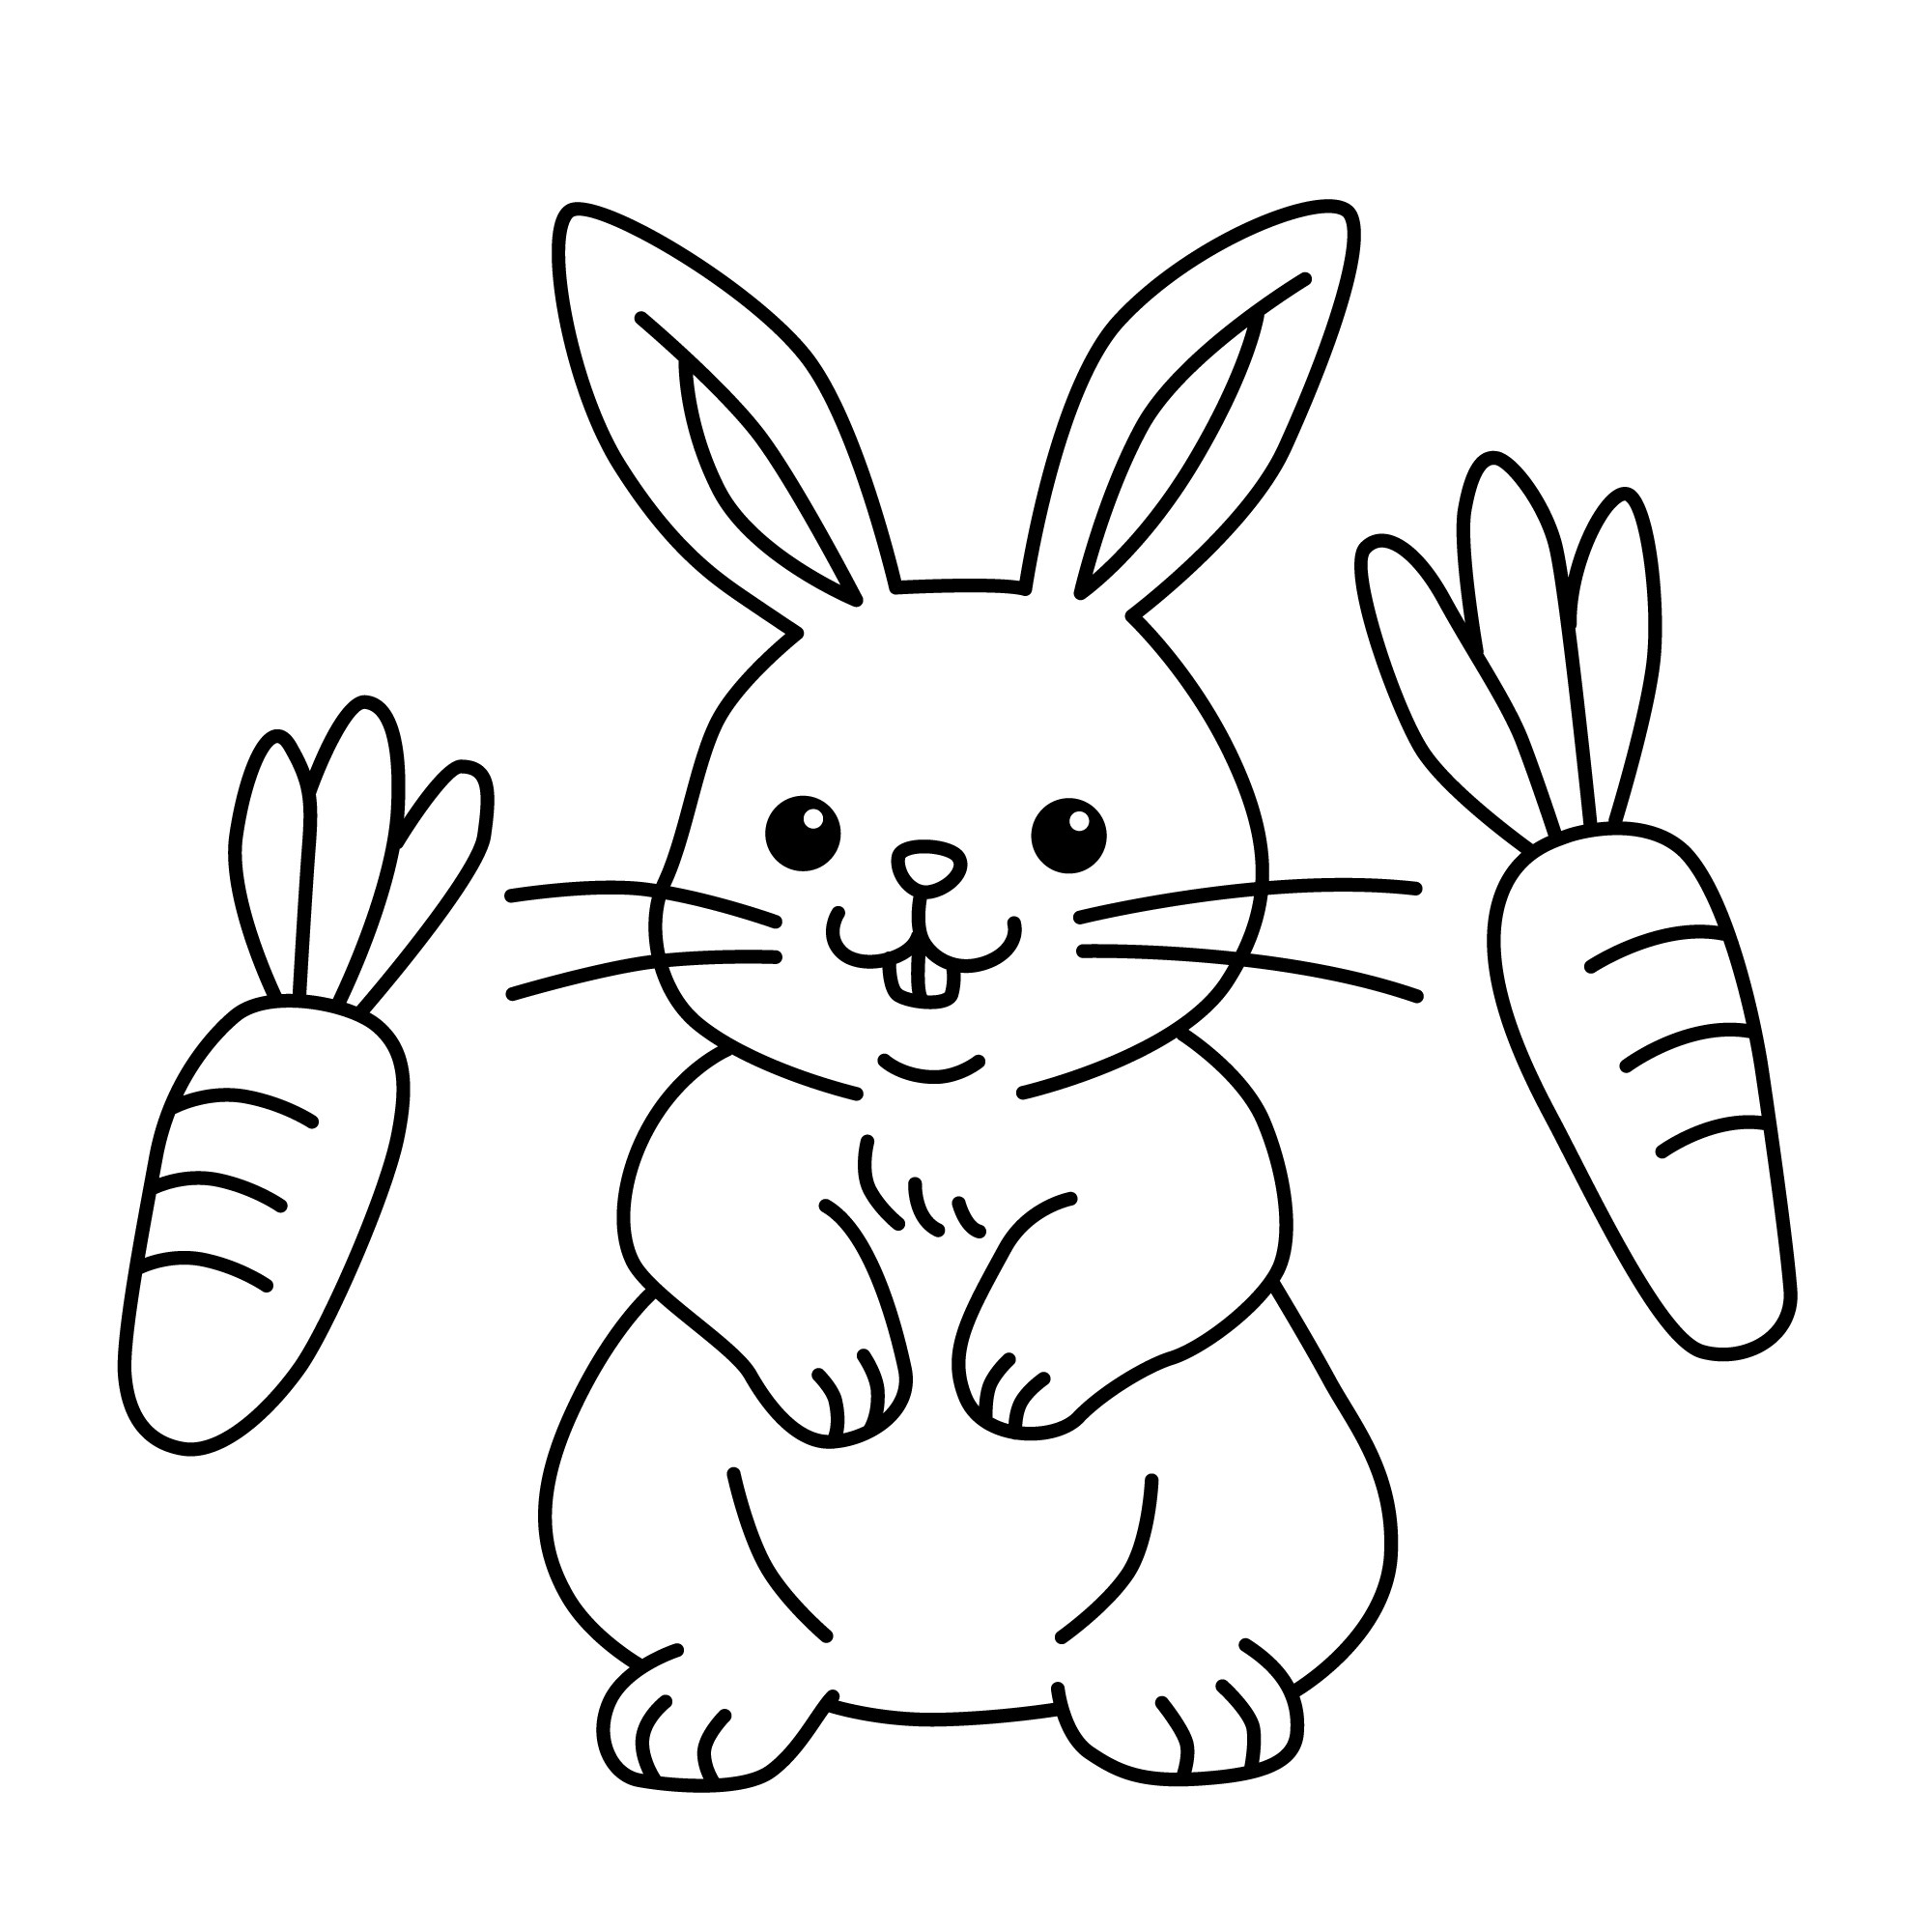 Раскраска для детей: заяц с морковками